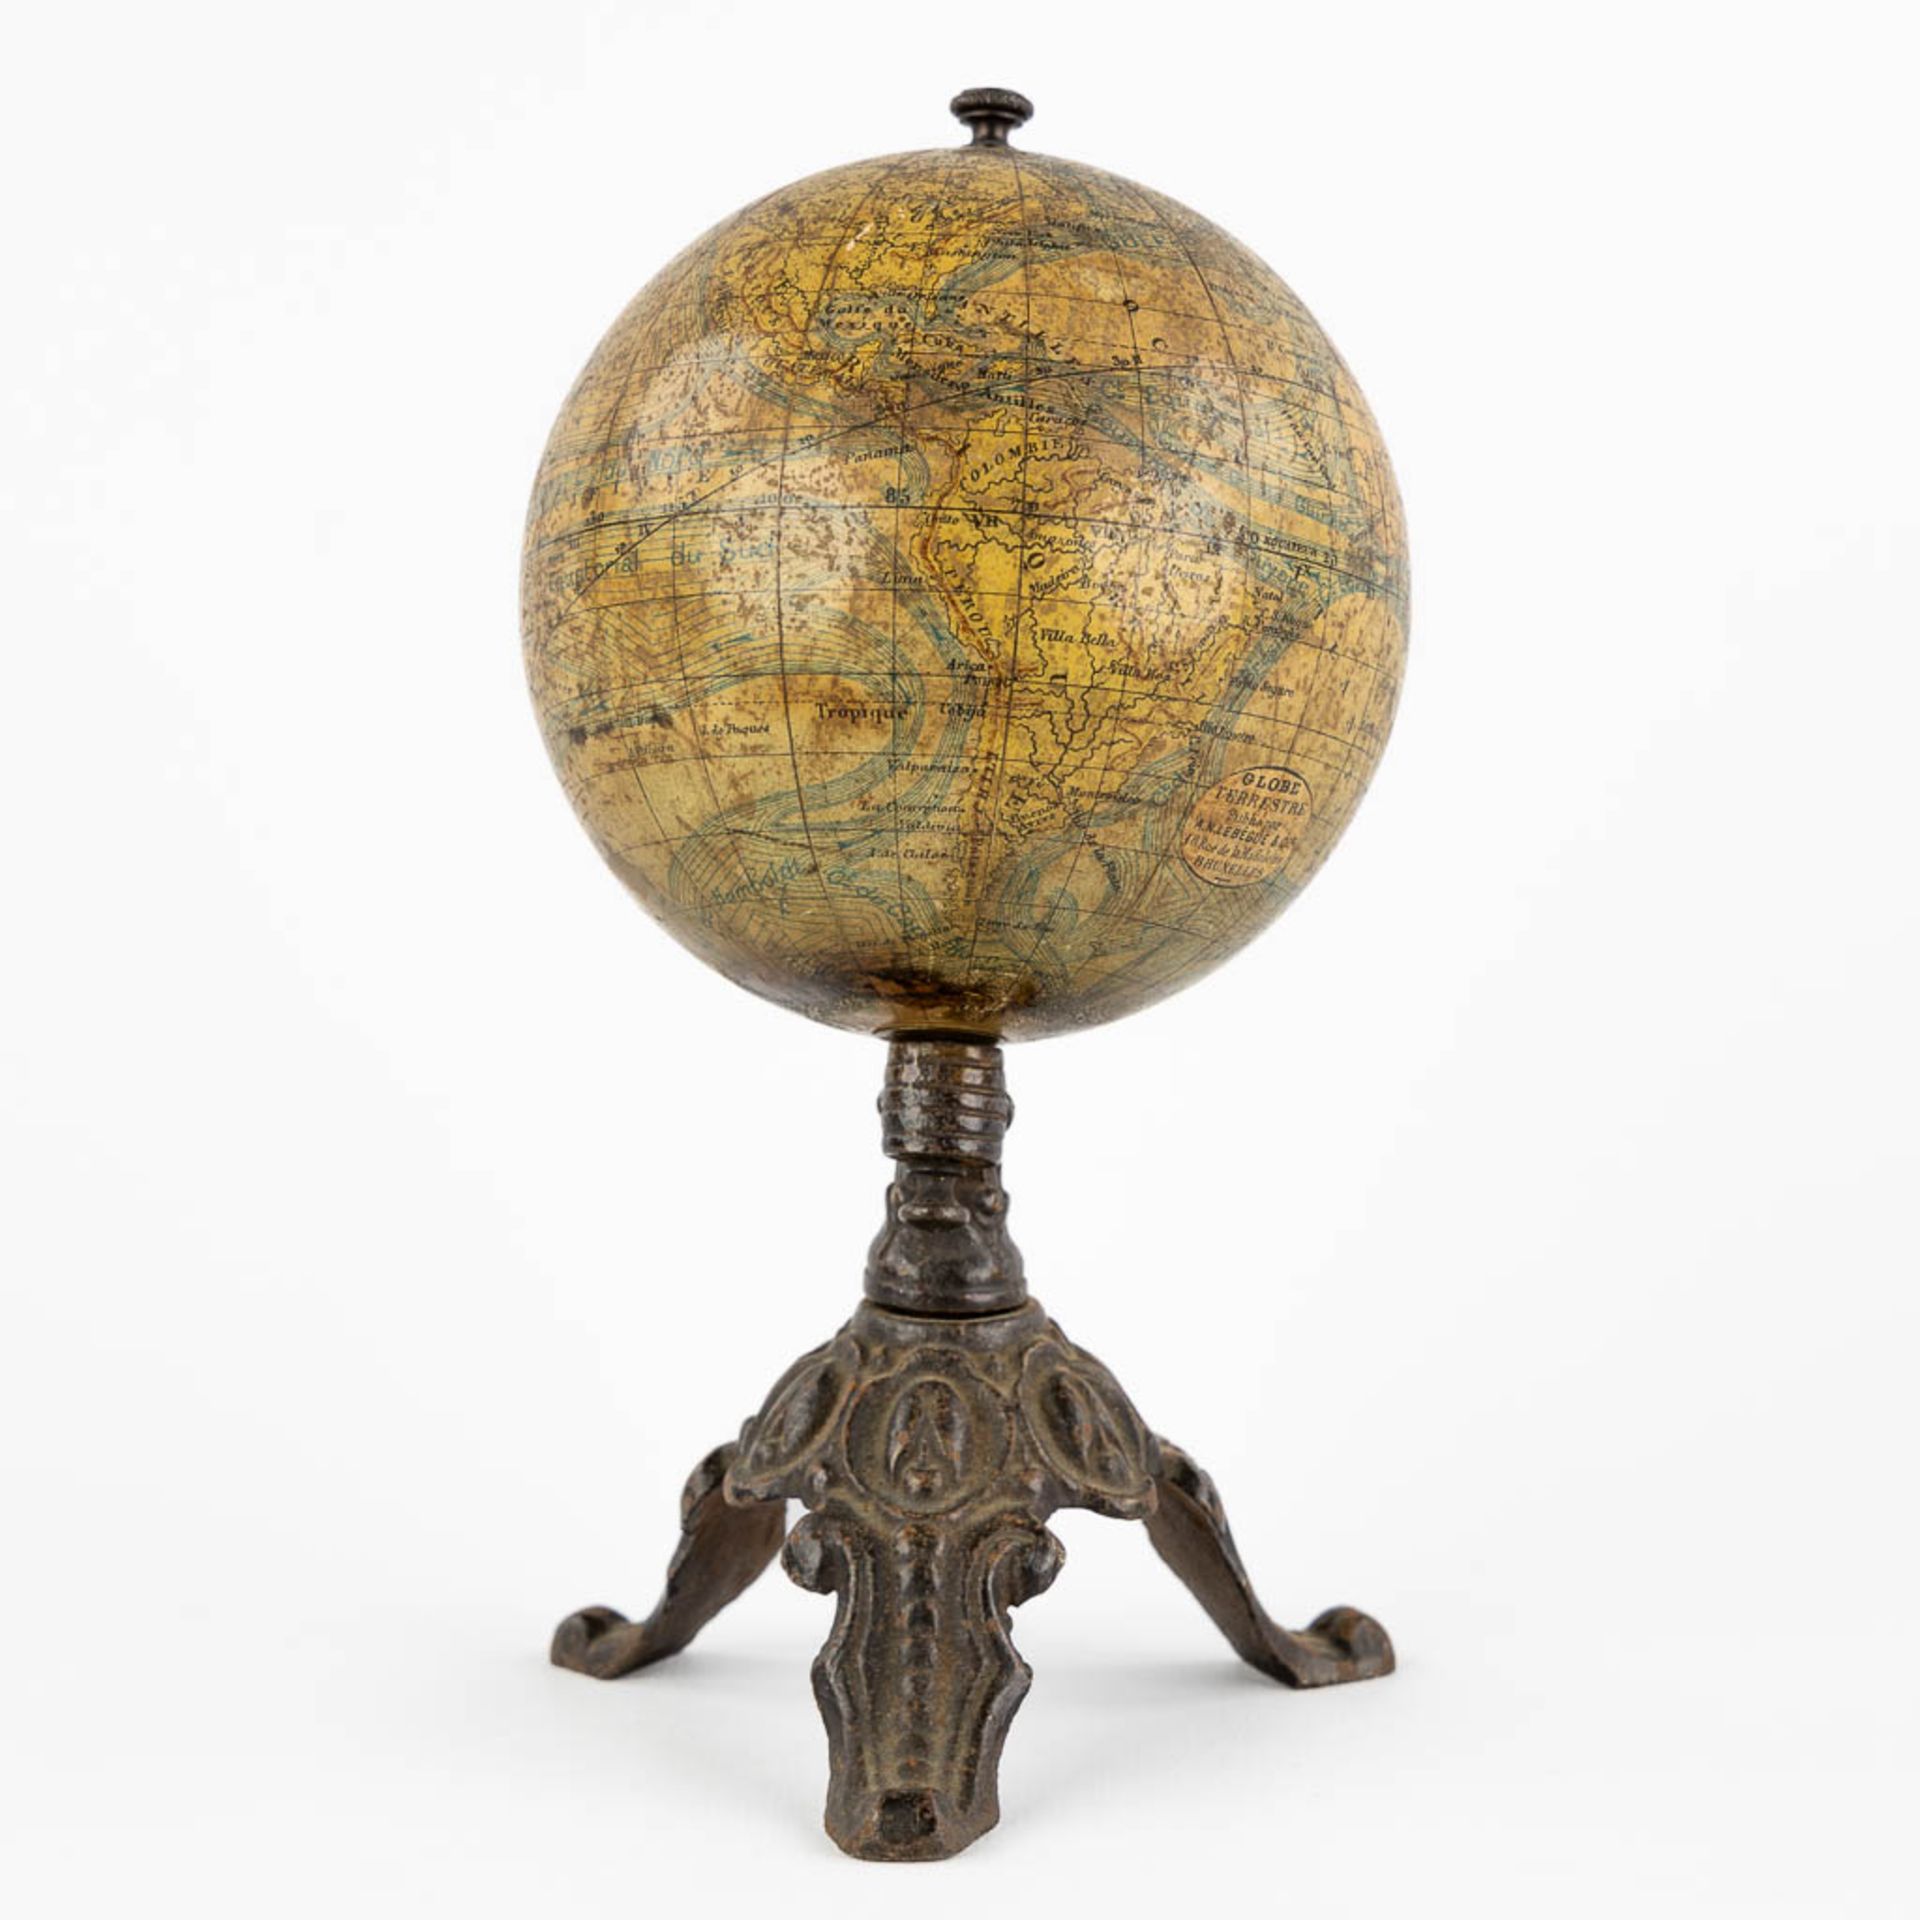 J. Lebegue & Cie, an antique globe on a cast-iron base. Circa 1900. (H:19 x D:10 cm)